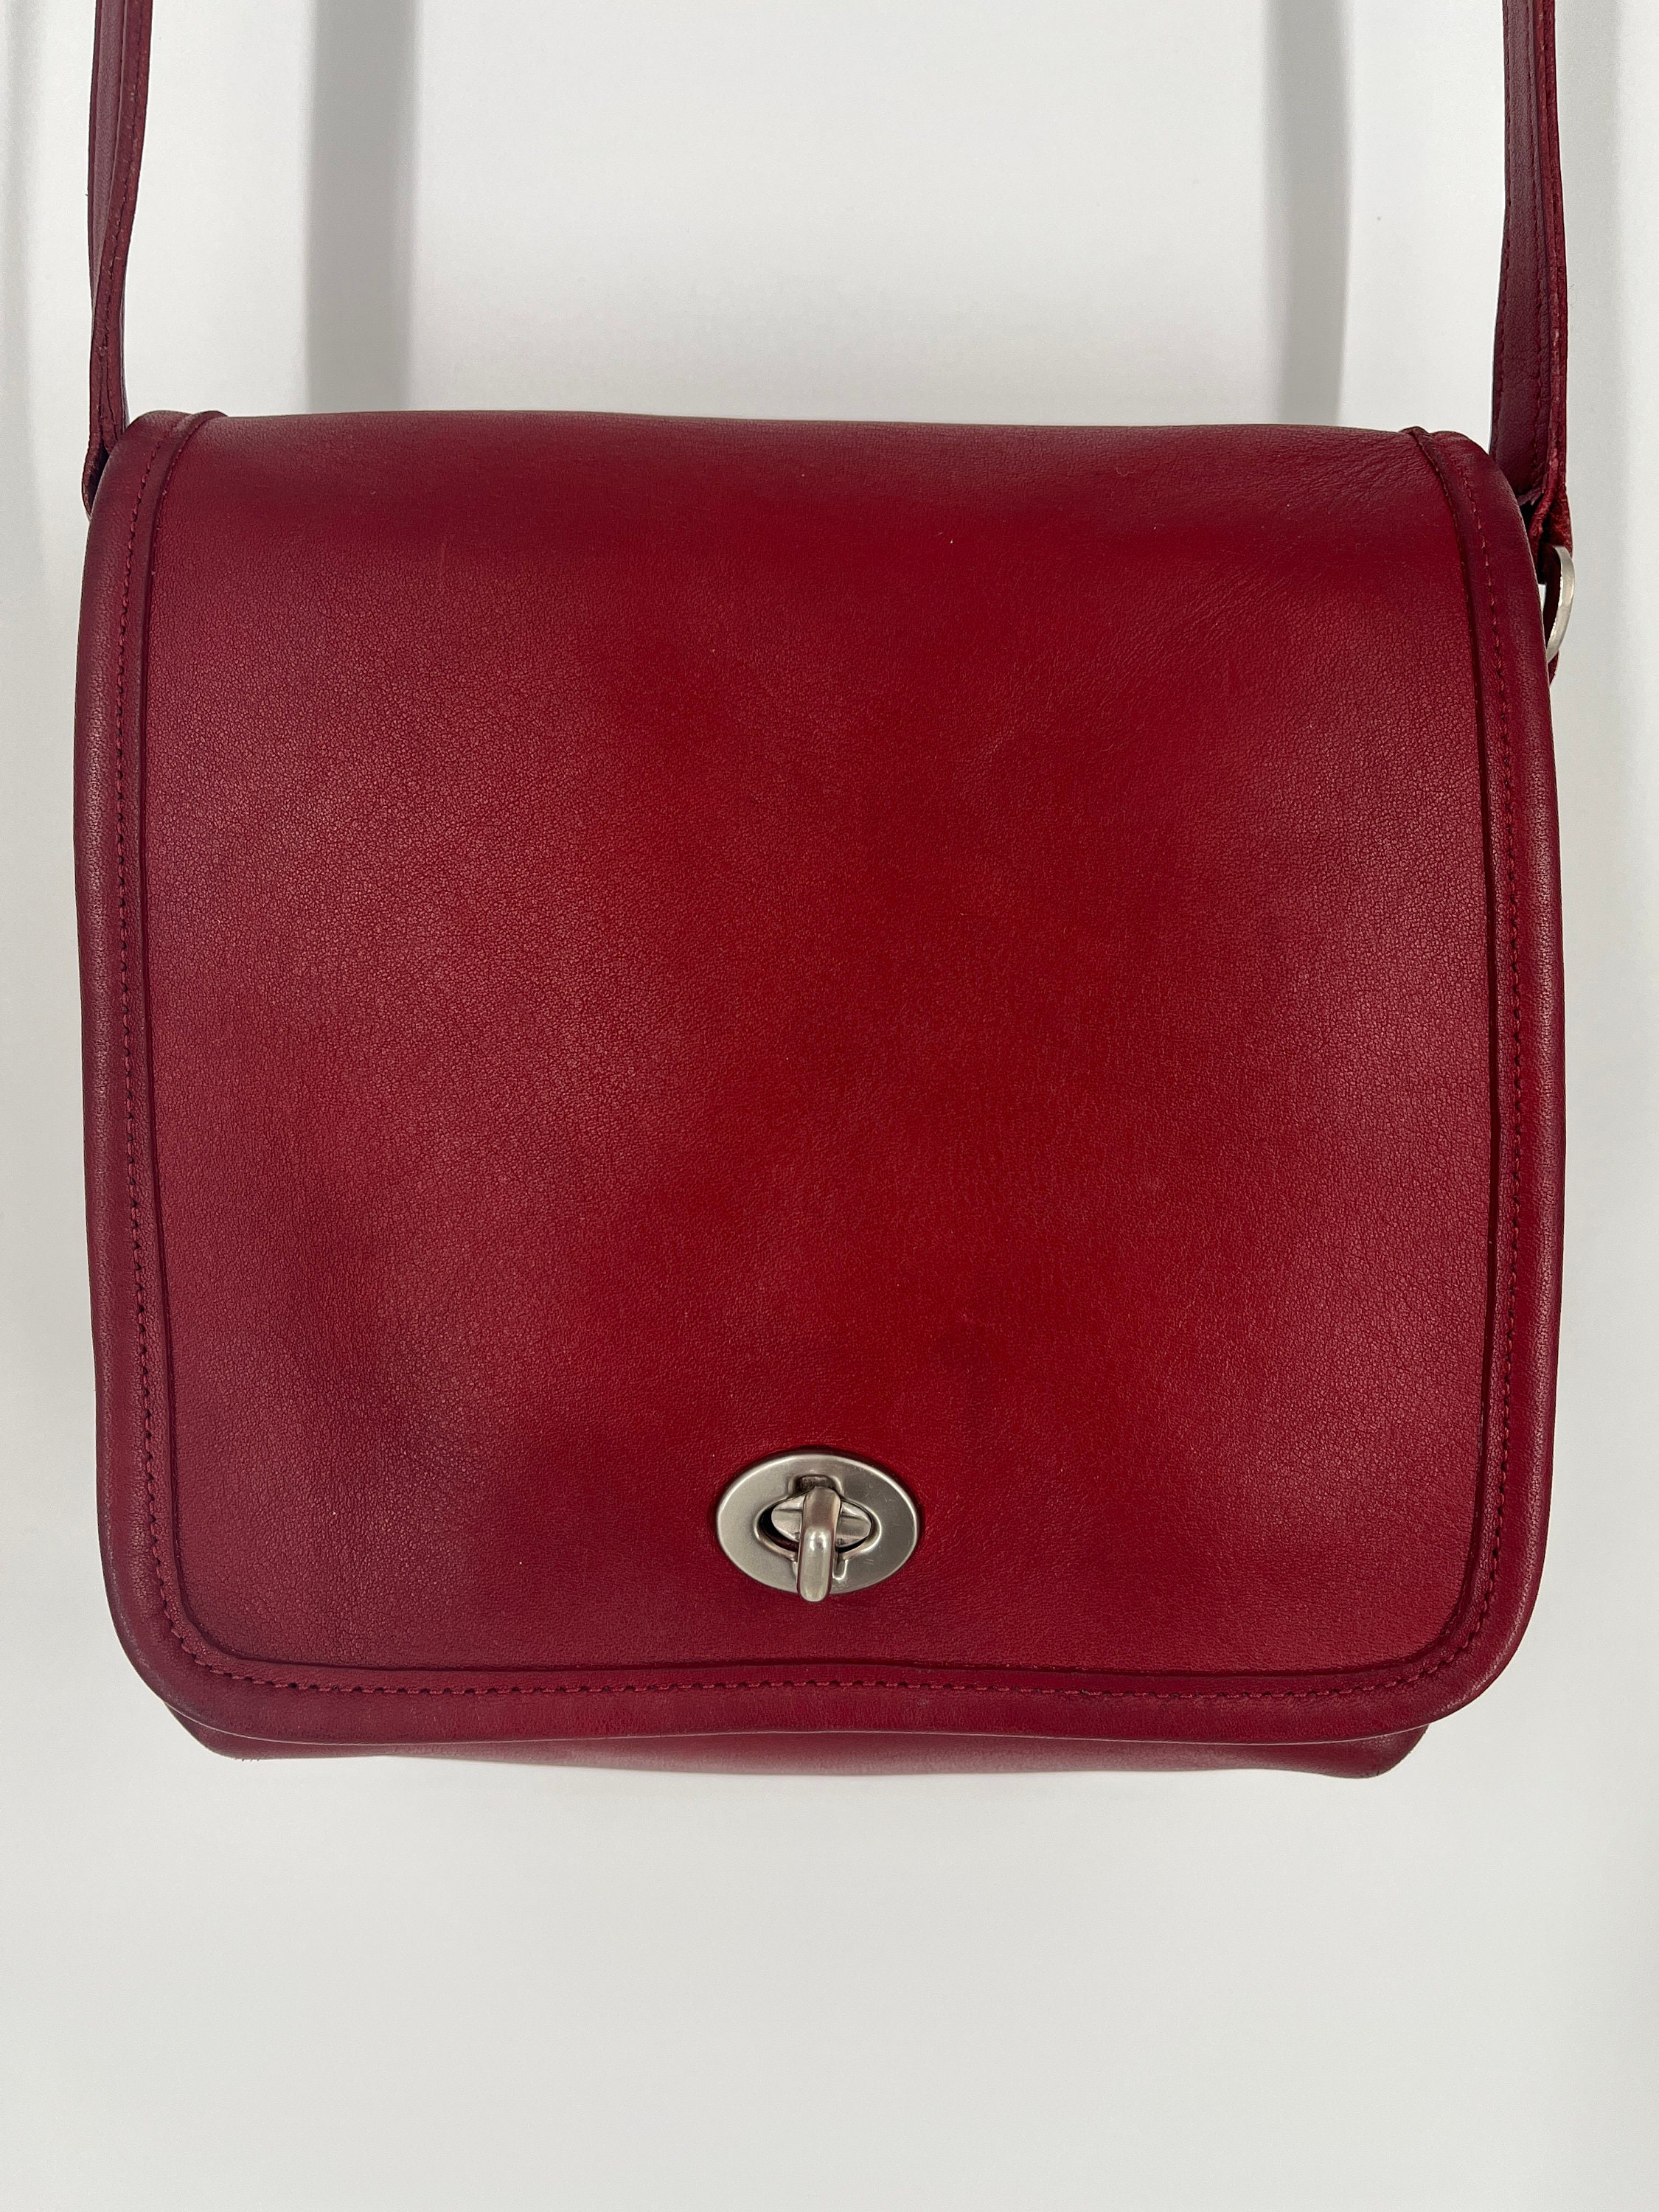 Coach Handbag Original Authentic Maroon/Red Colour Alma Full Size